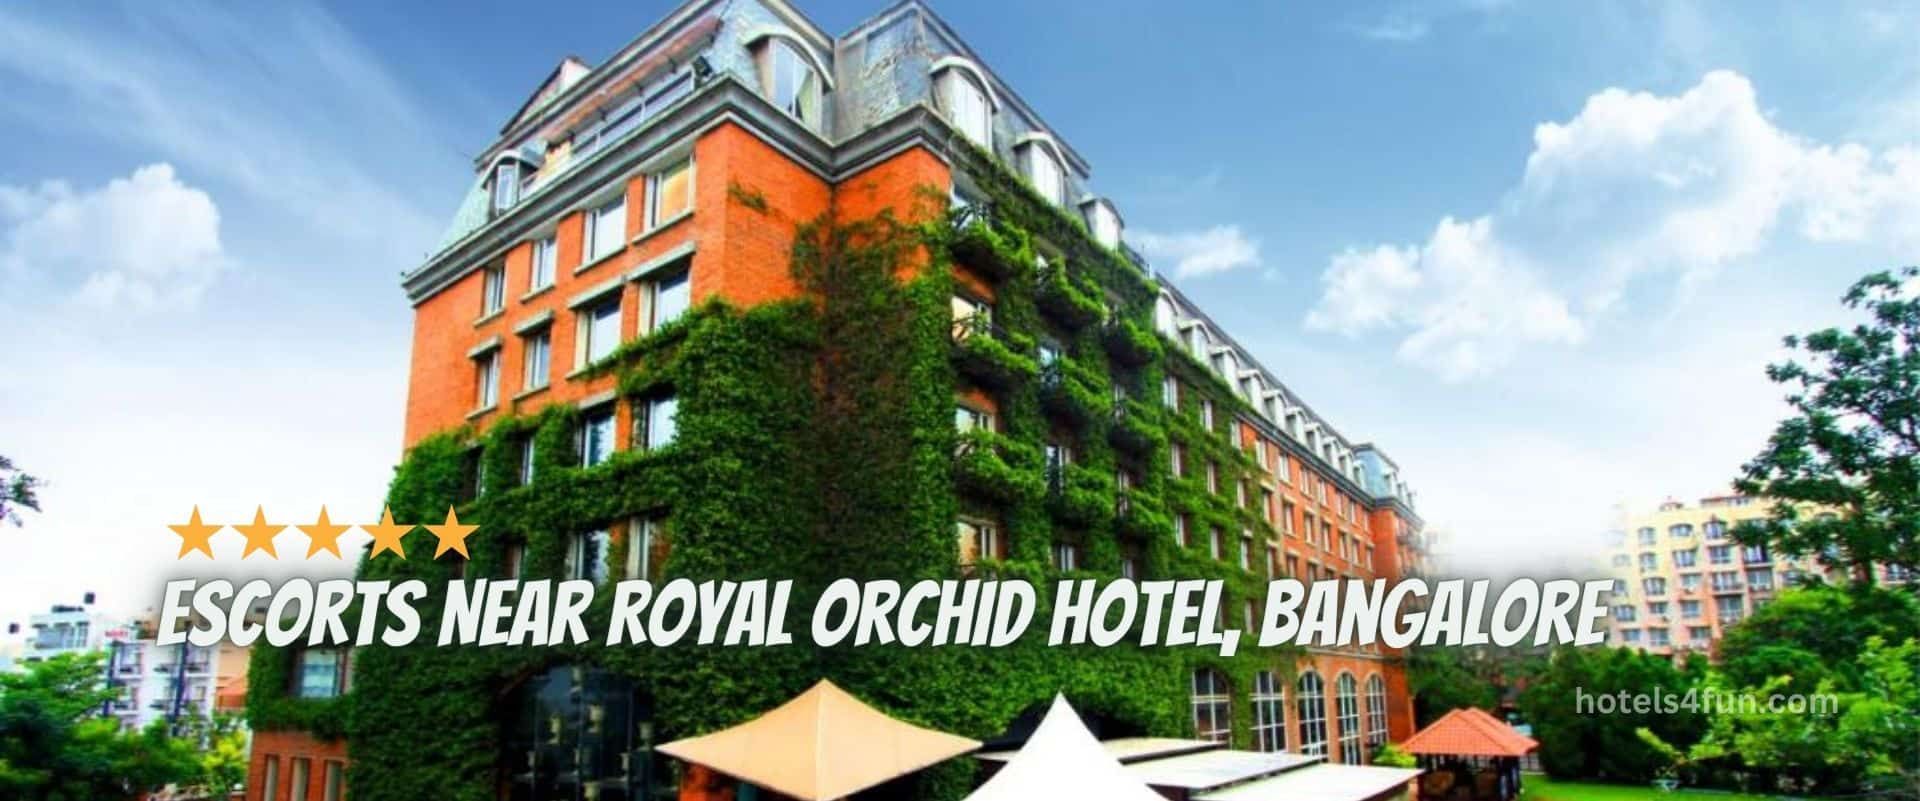 escorts-near-royal-orchid-hotel-bangalore Hotel Escorts